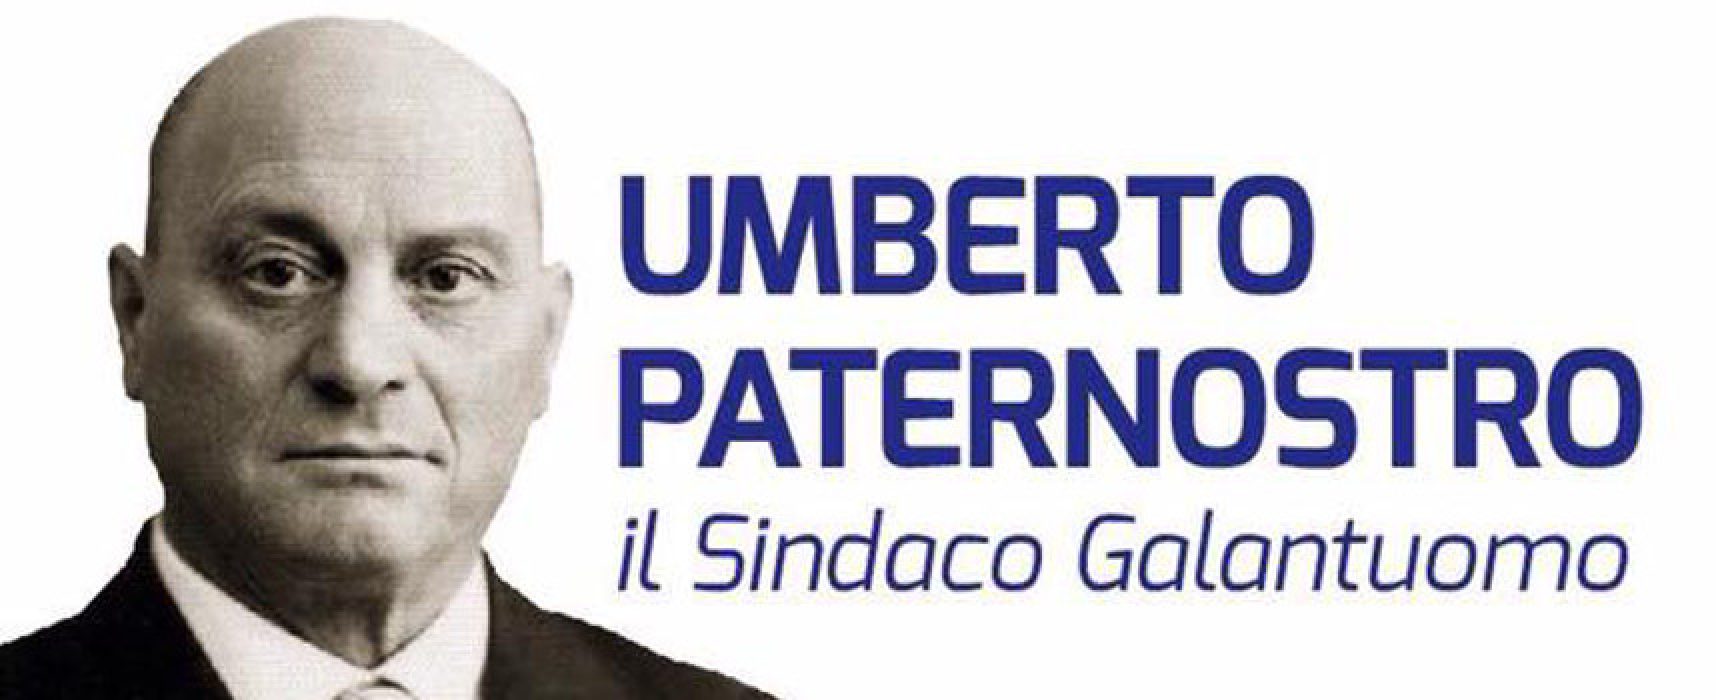 Bisceglie 2018, questa sera a Santa Croce convegno su Umberto Paternostro